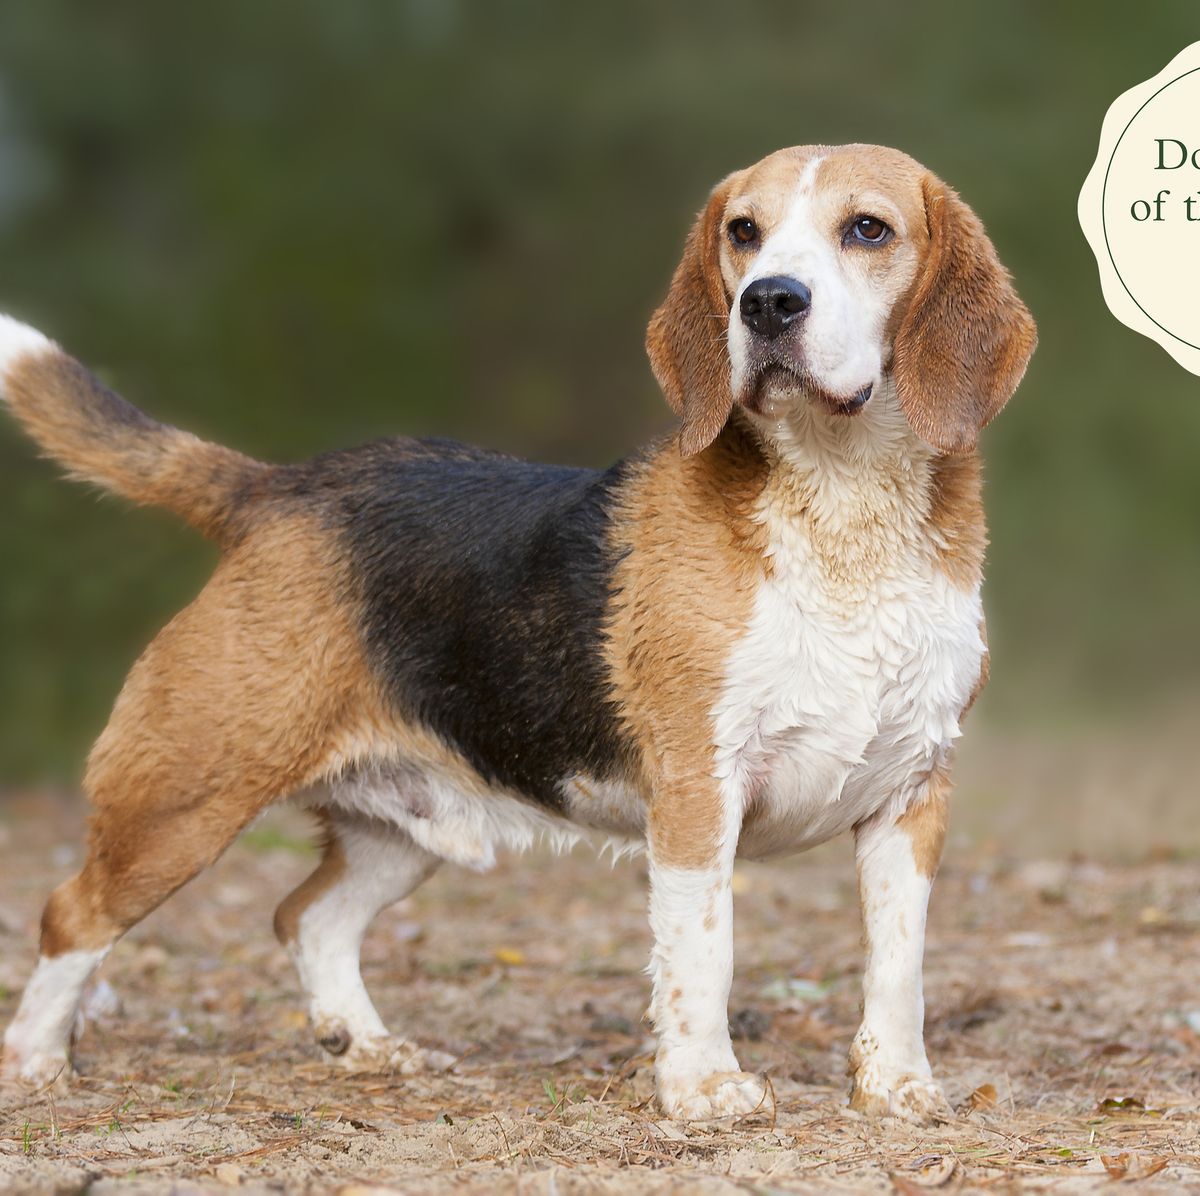 do beagles need companions? 2